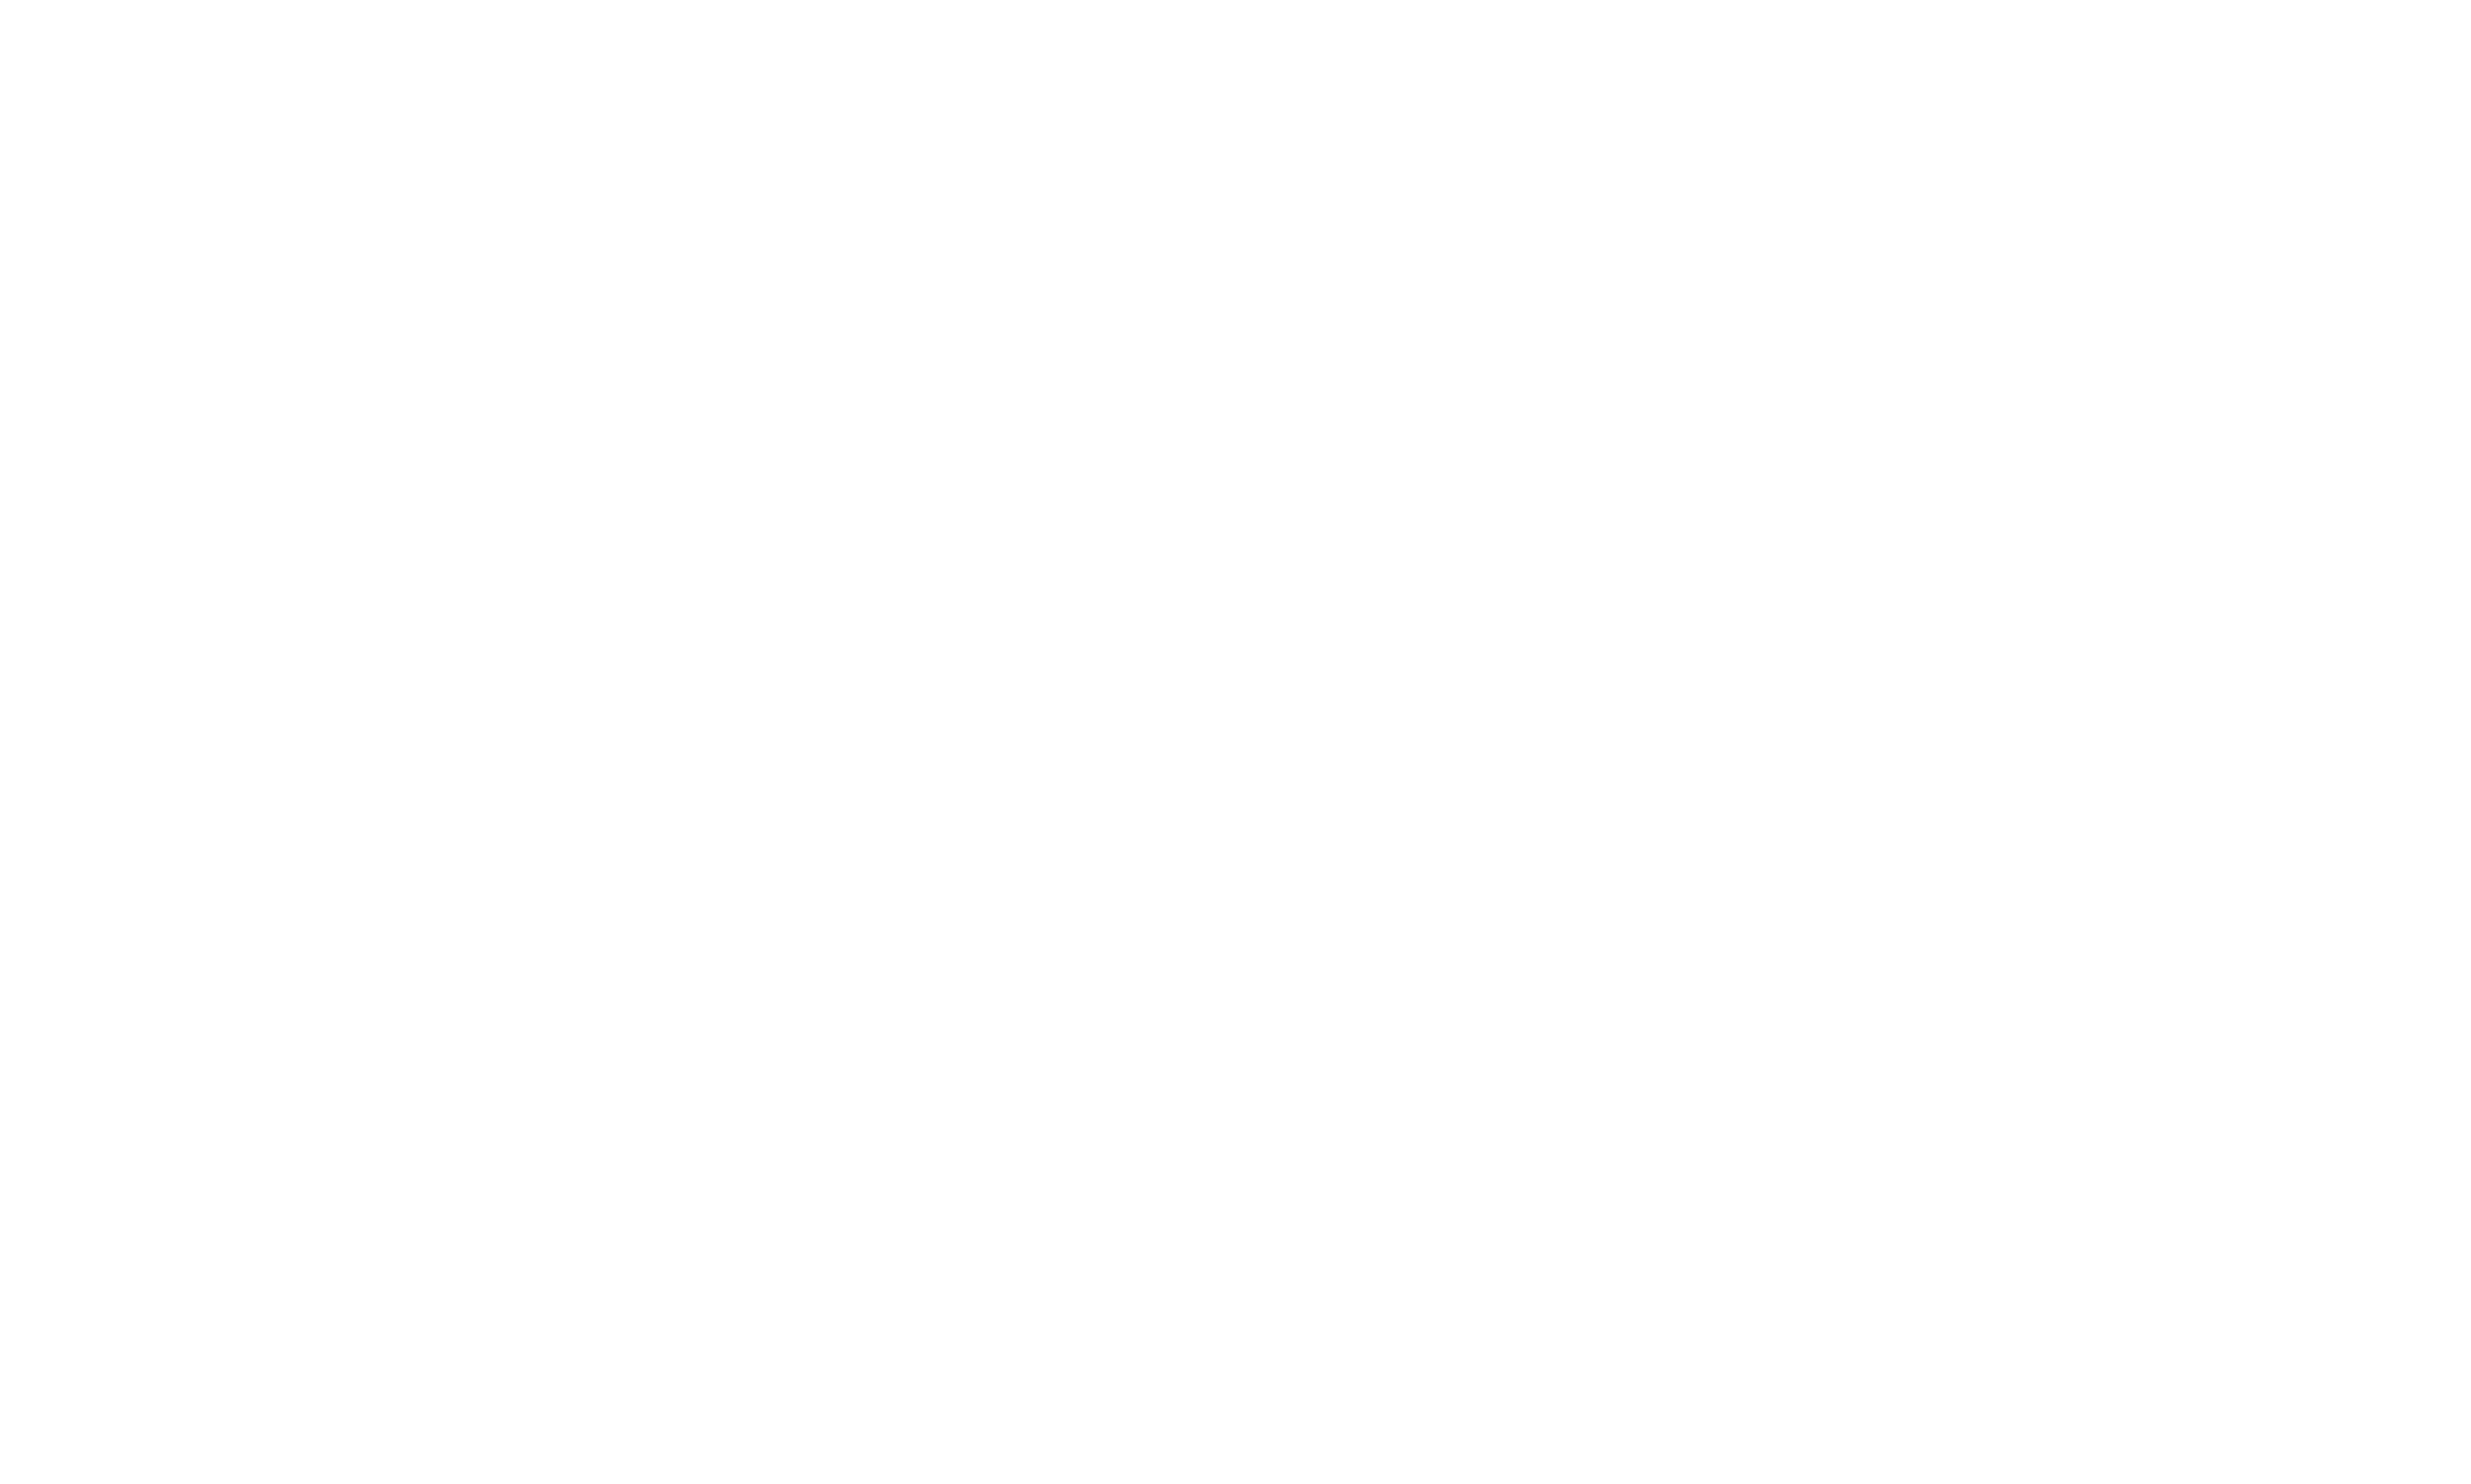 Plants vs. Zombies: Battle for Neighborville™ - Official EA Site 